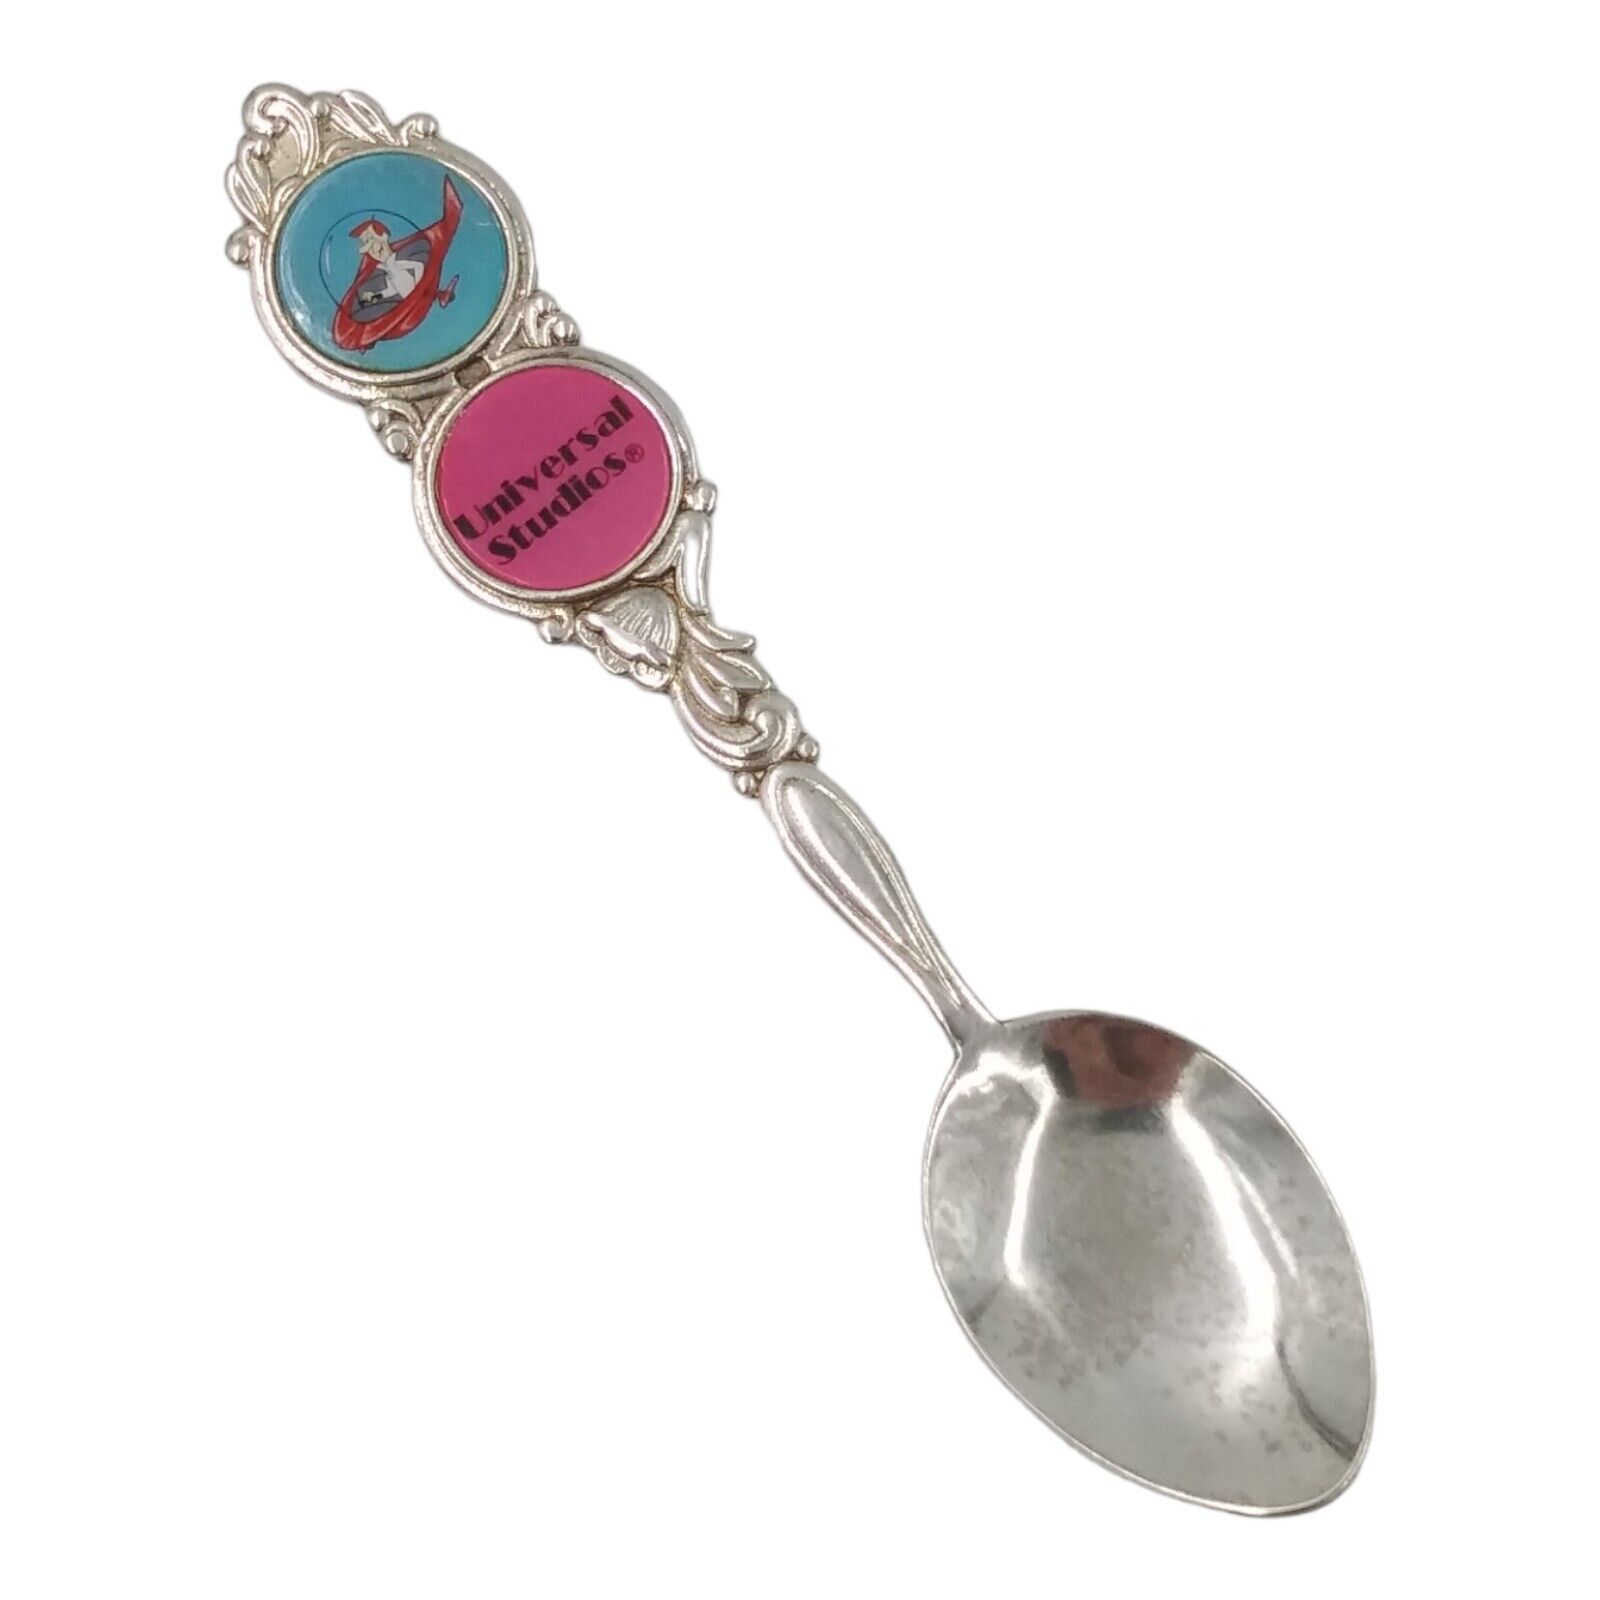 Vintage The Jetsons Universal Studios Souvenir Spoon Collectible George